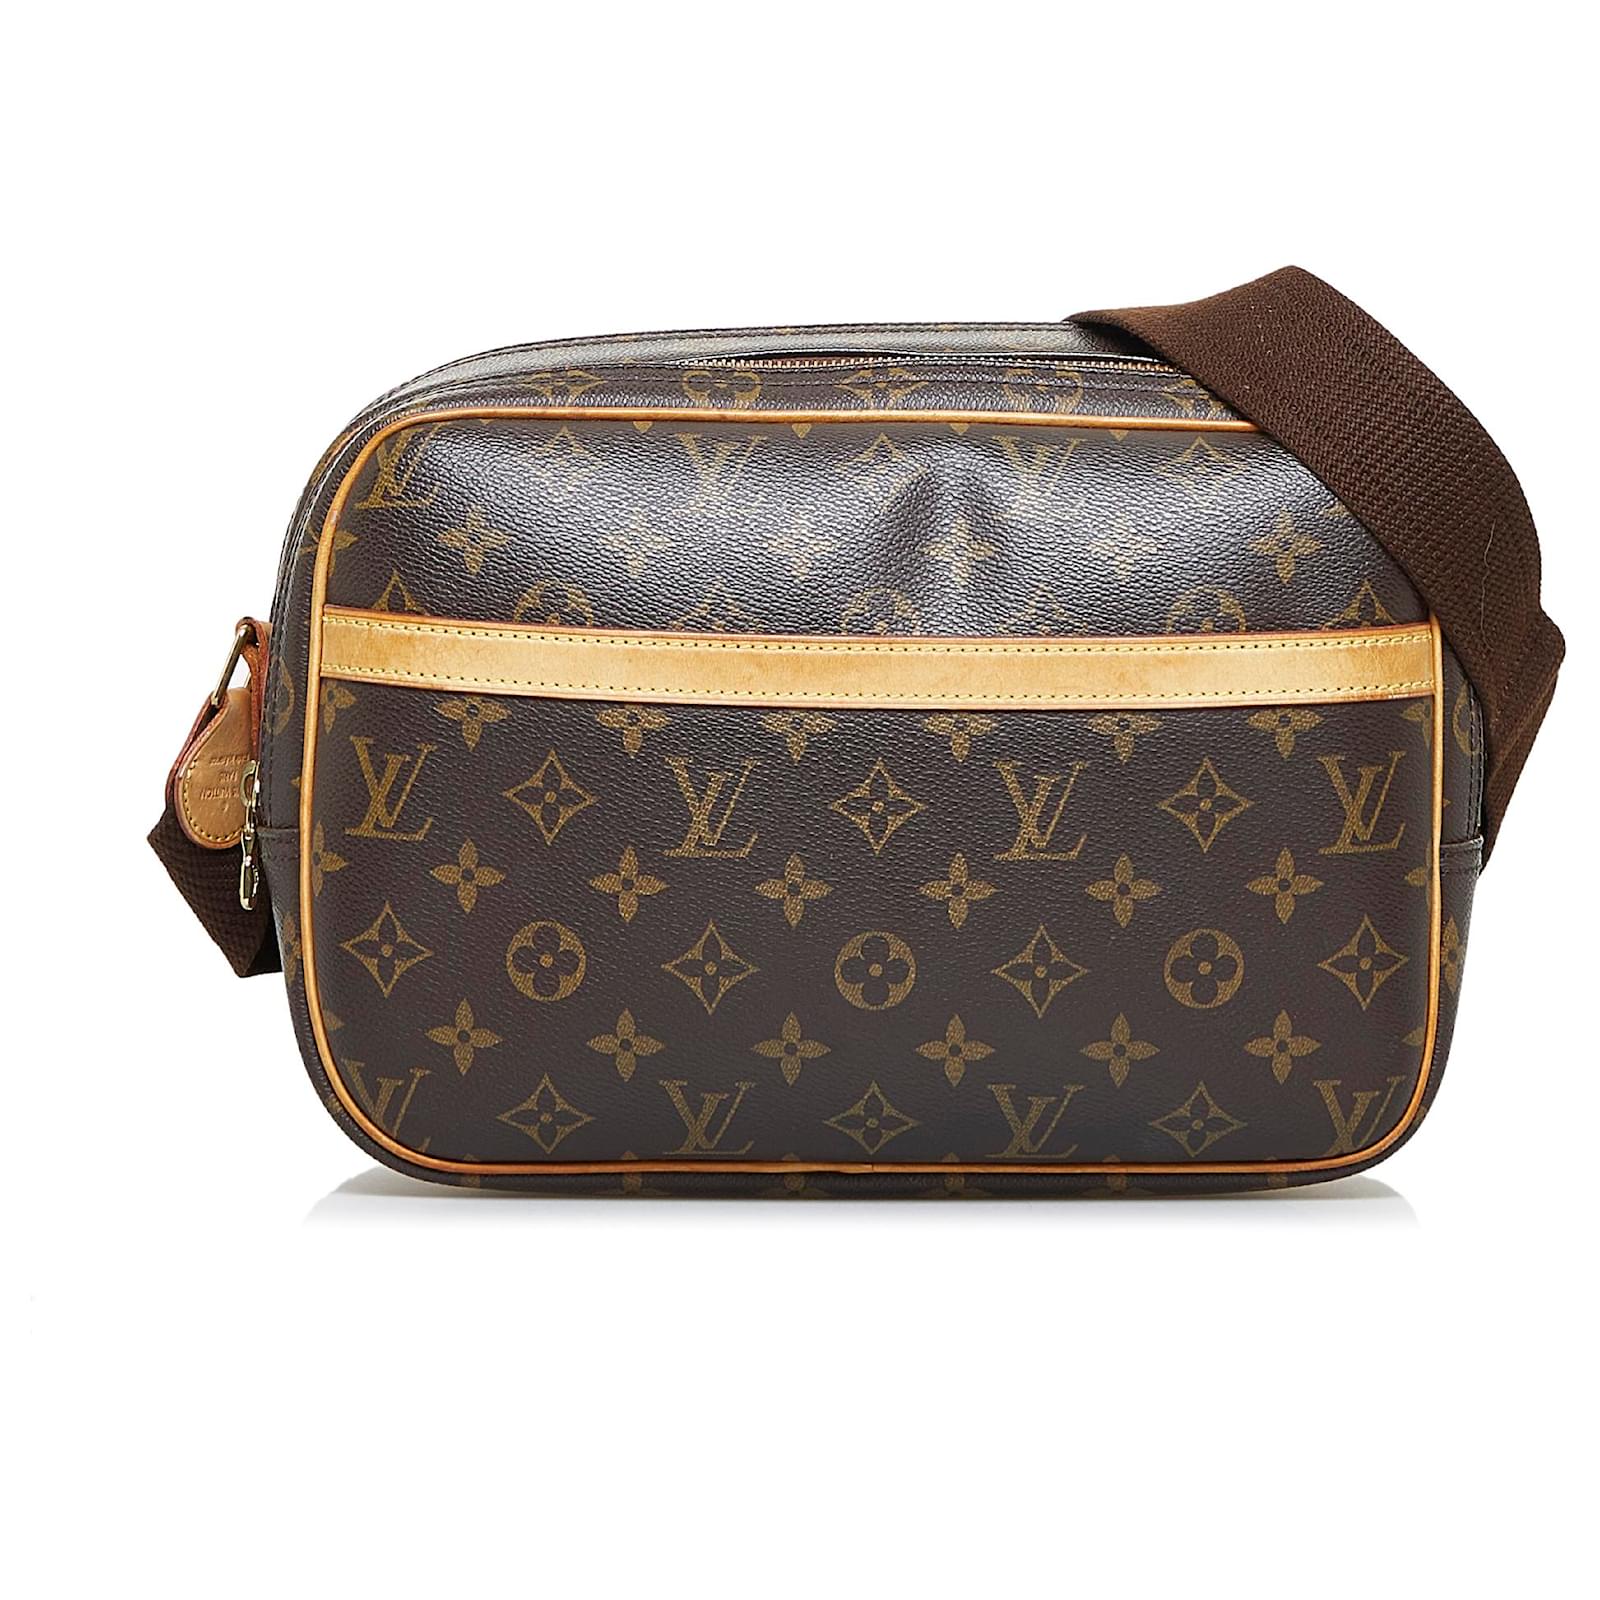 Louis Vuitton double front pocket handbag